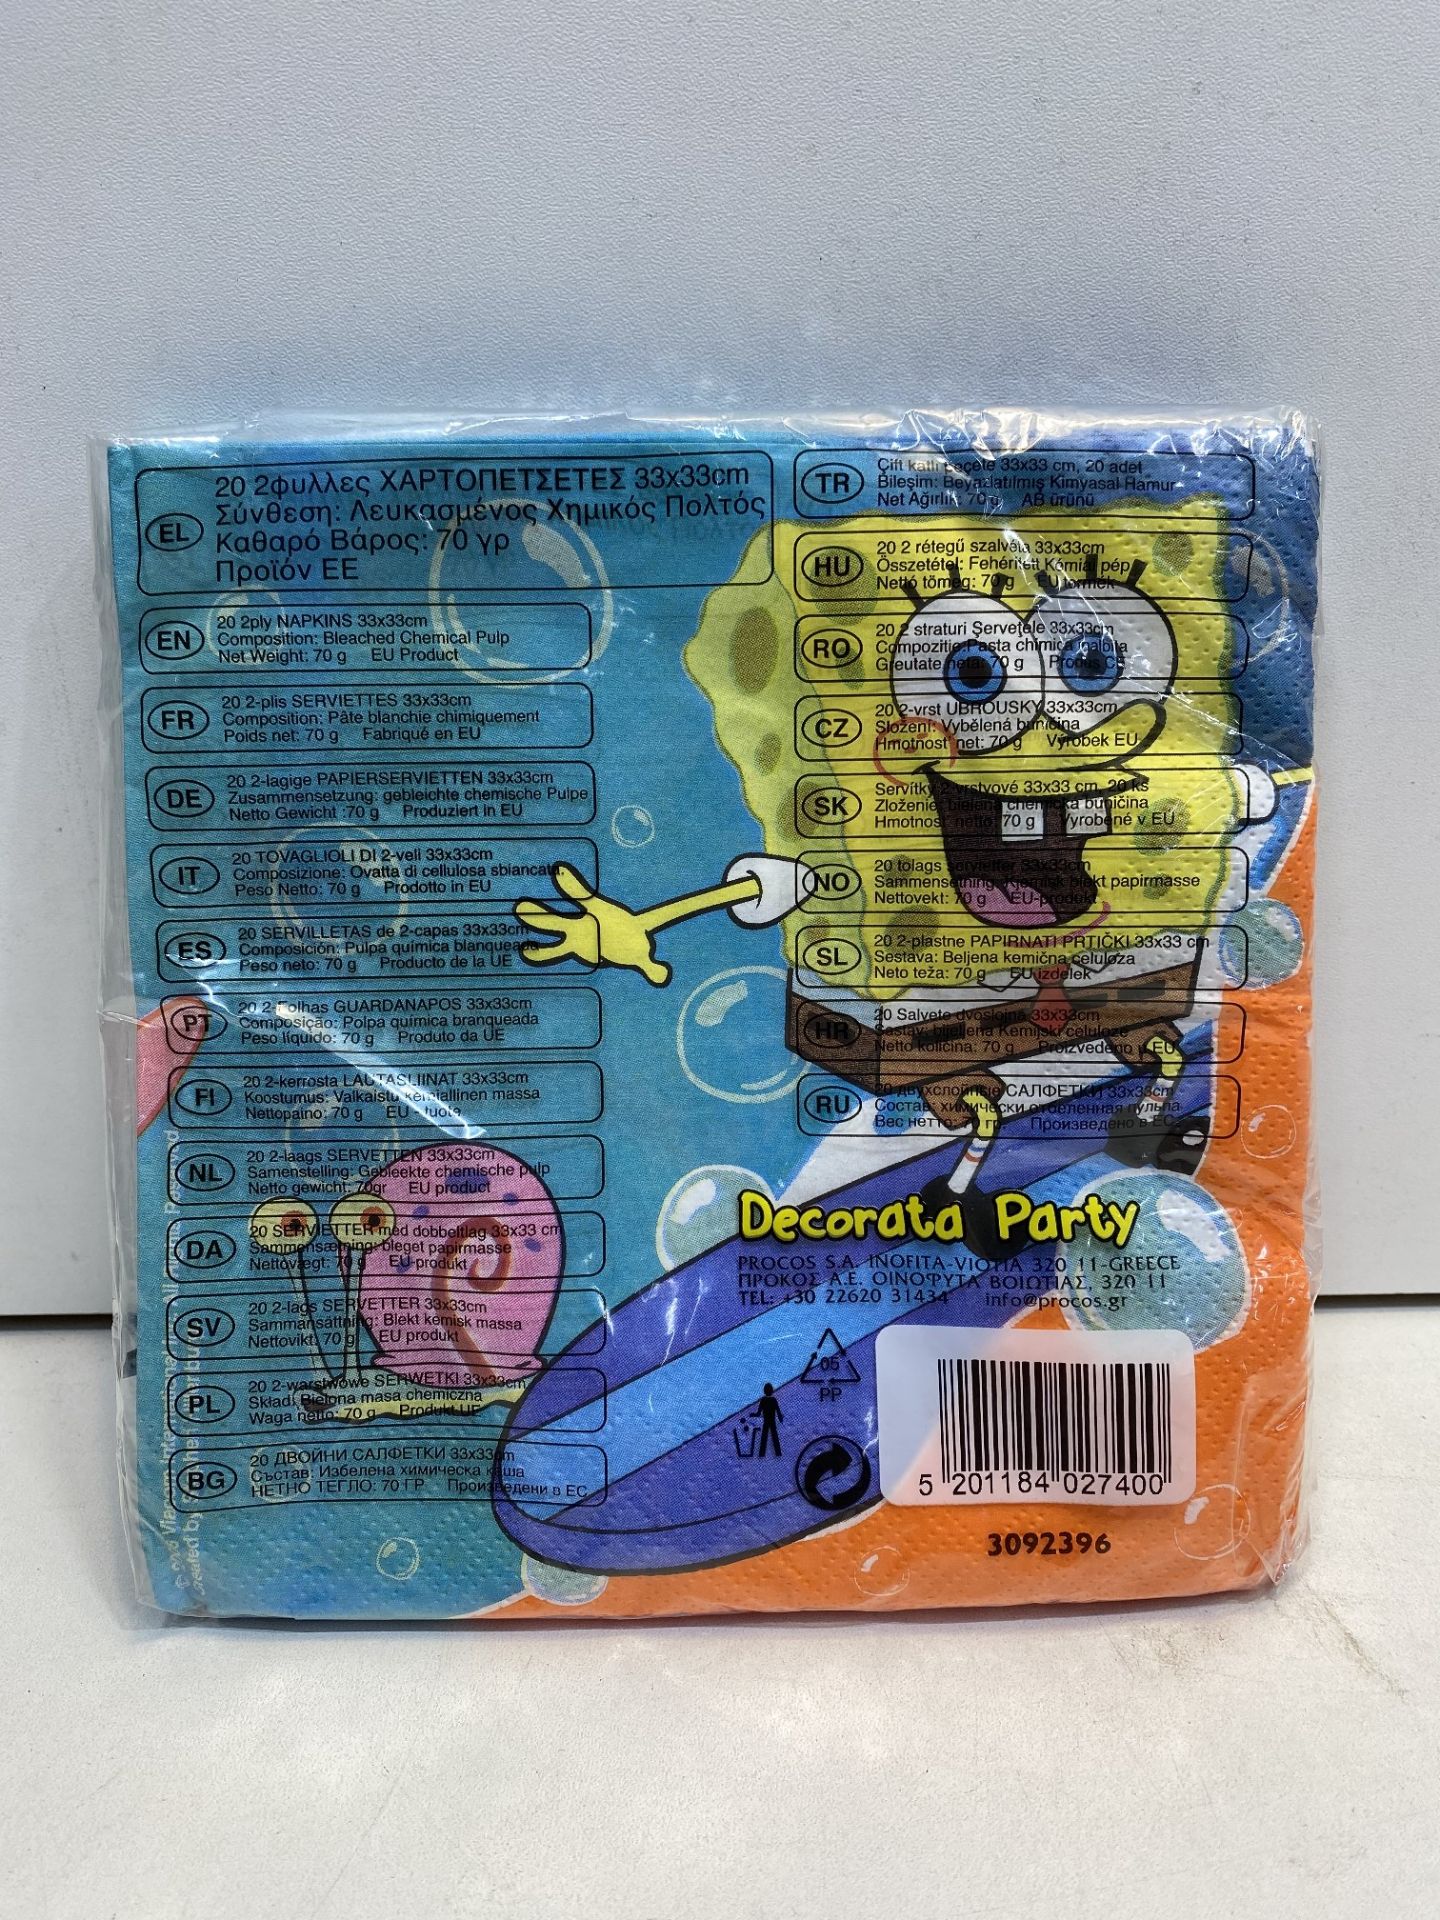 15 x SpongeBob SquarePants Napkin Packs | 5201184027400 - Image 2 of 3